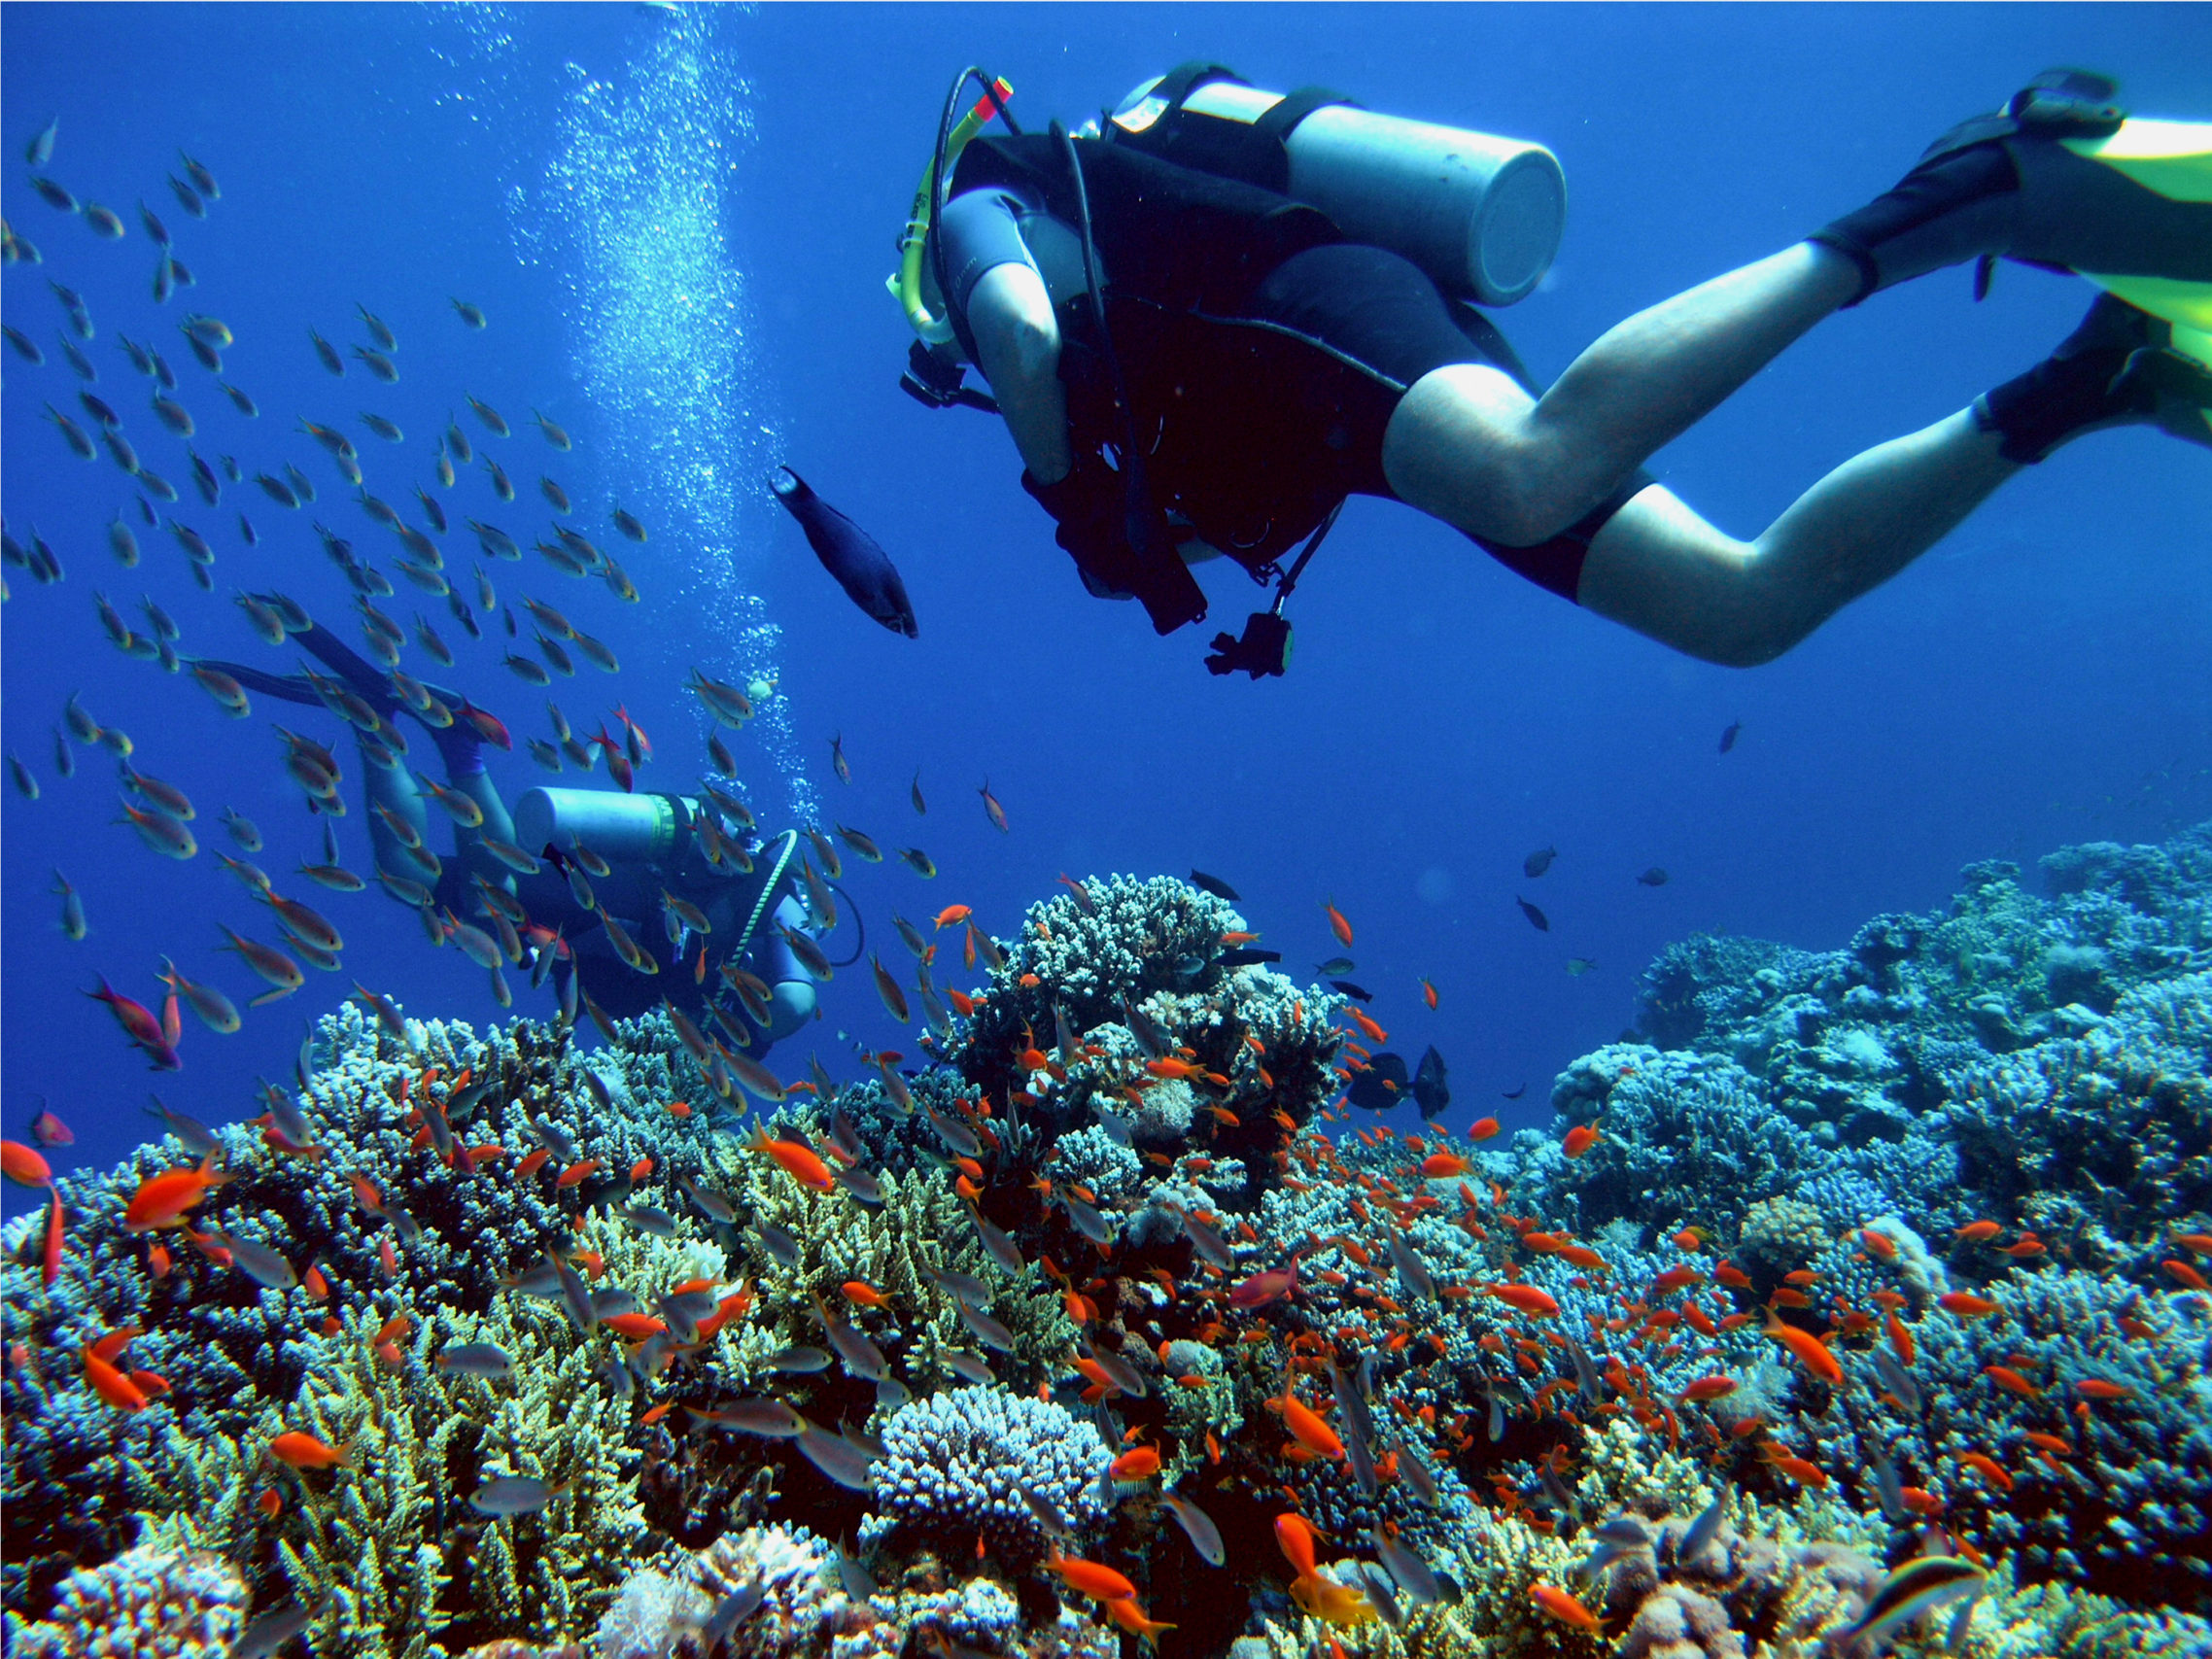 Scuba Diving is High Risk